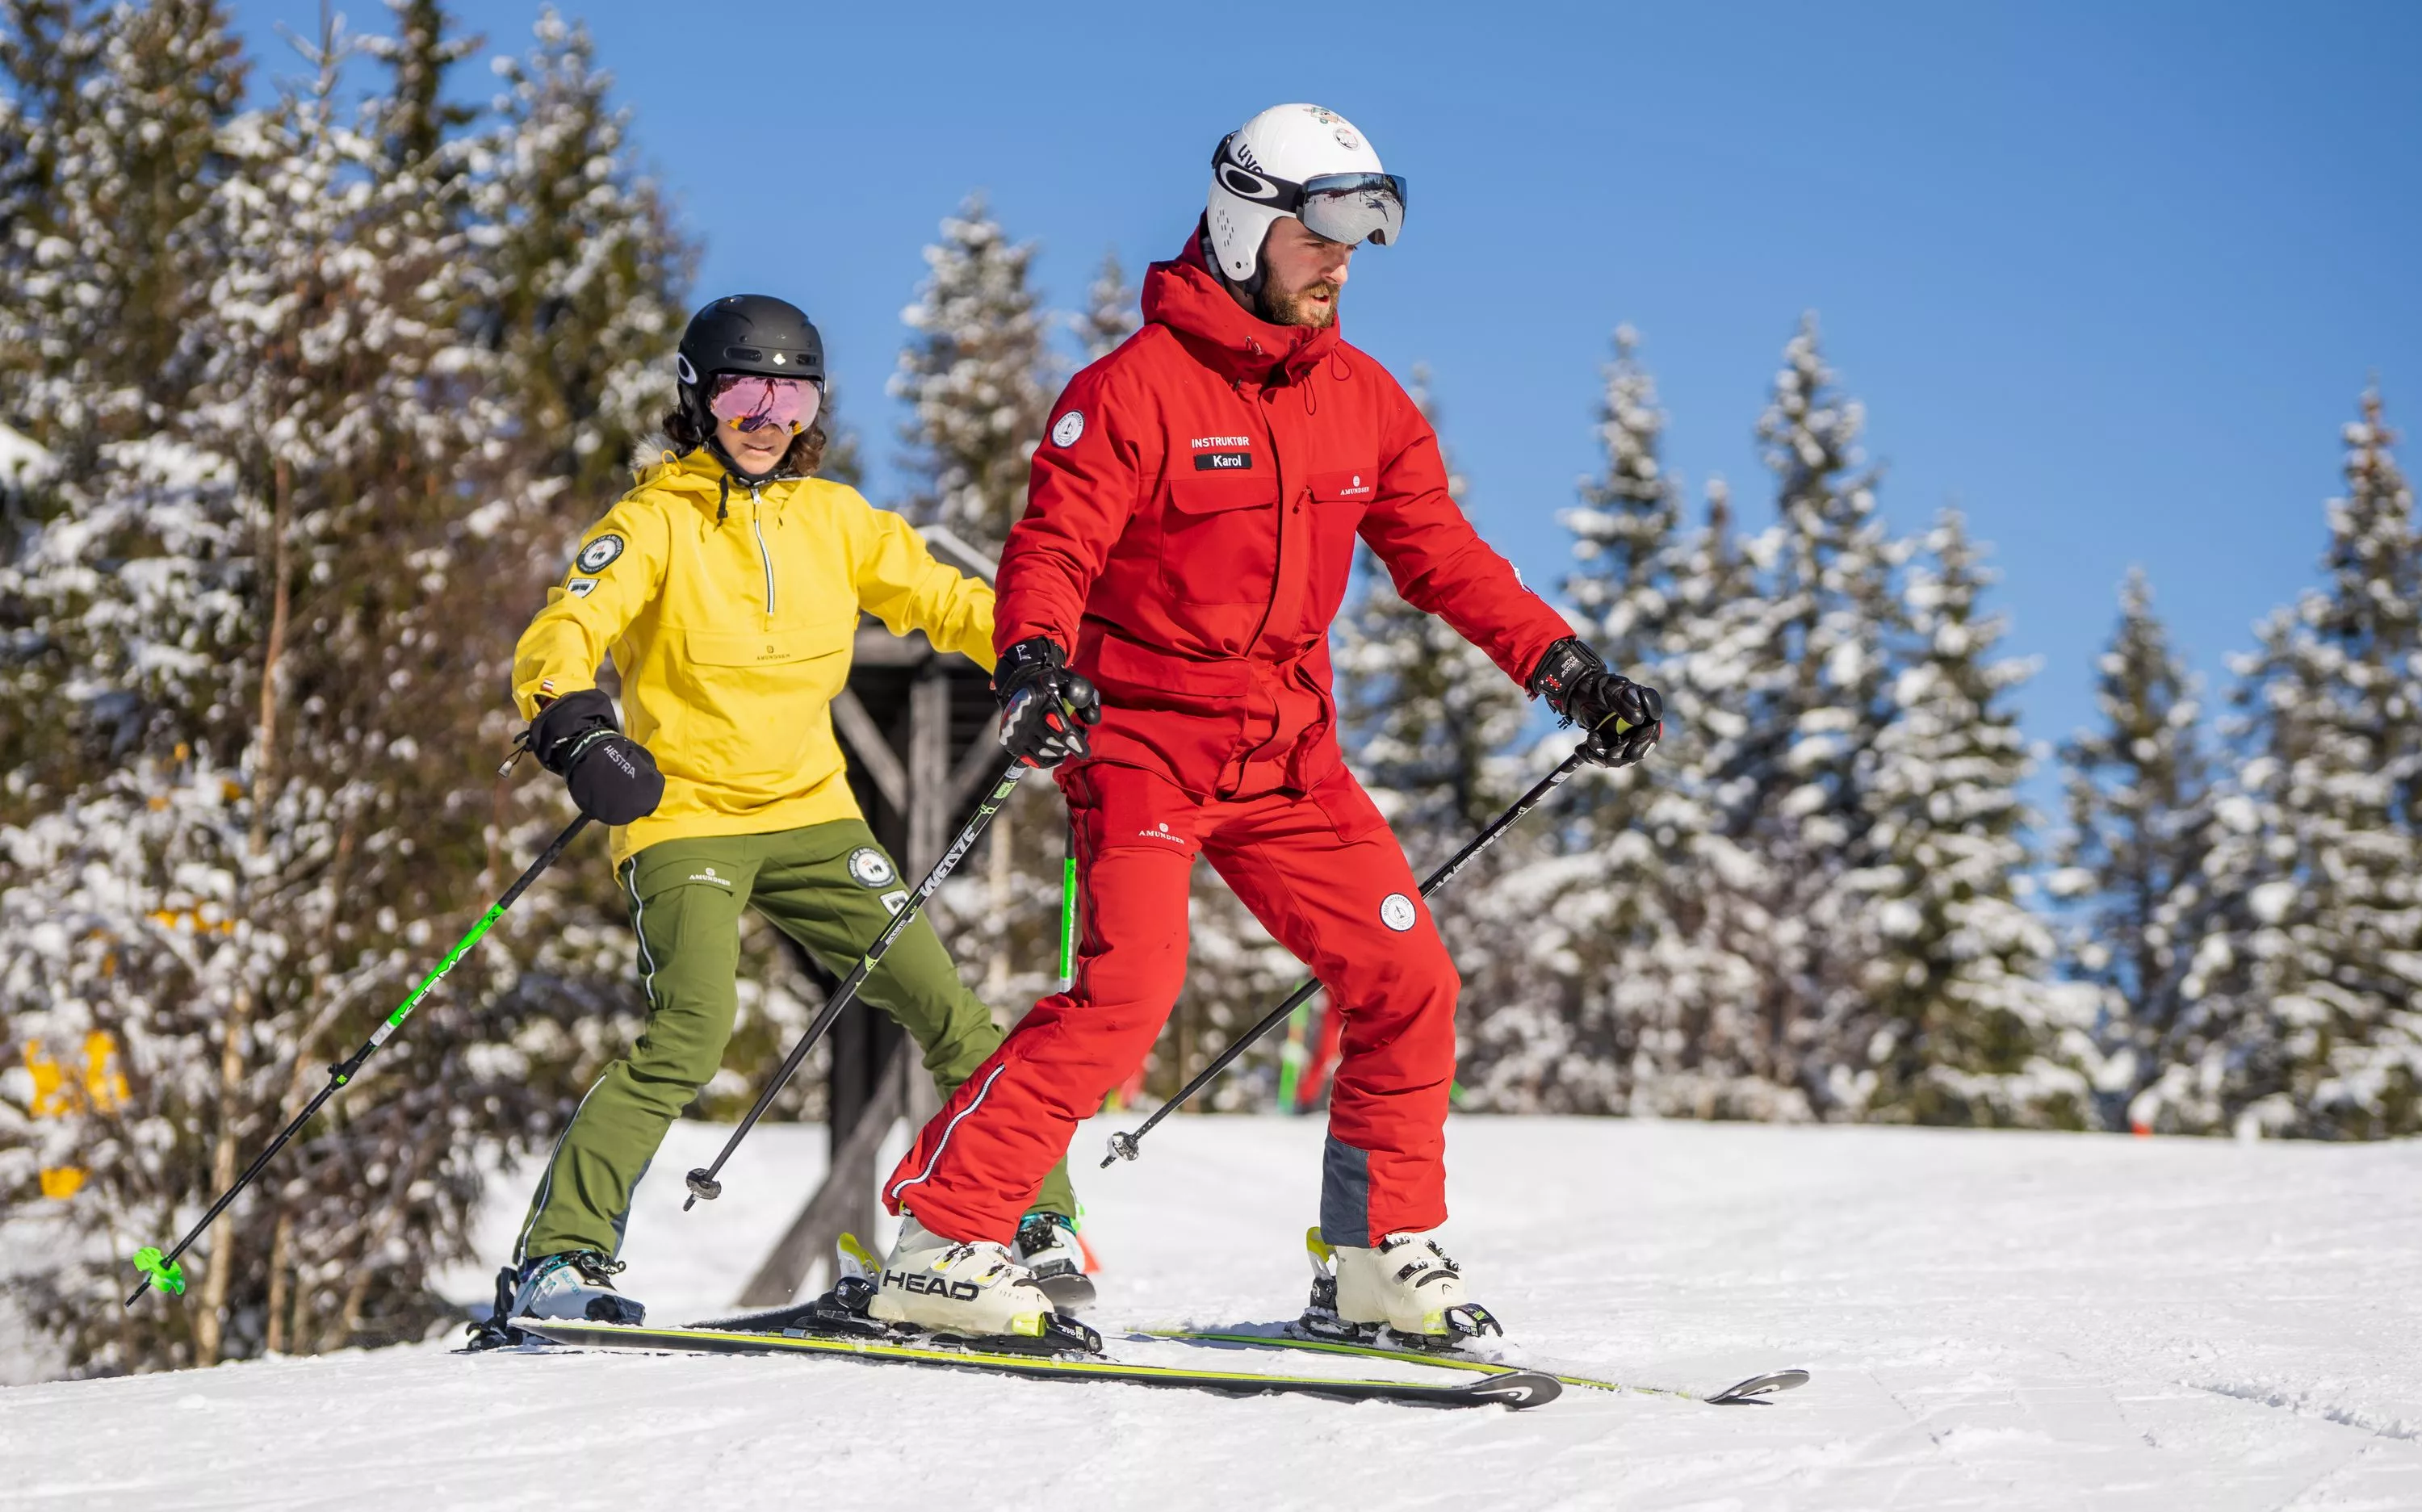 Tryvann Skiing Academy in Norway, Europe | Snowboarding,Skiing - Rated 0.7